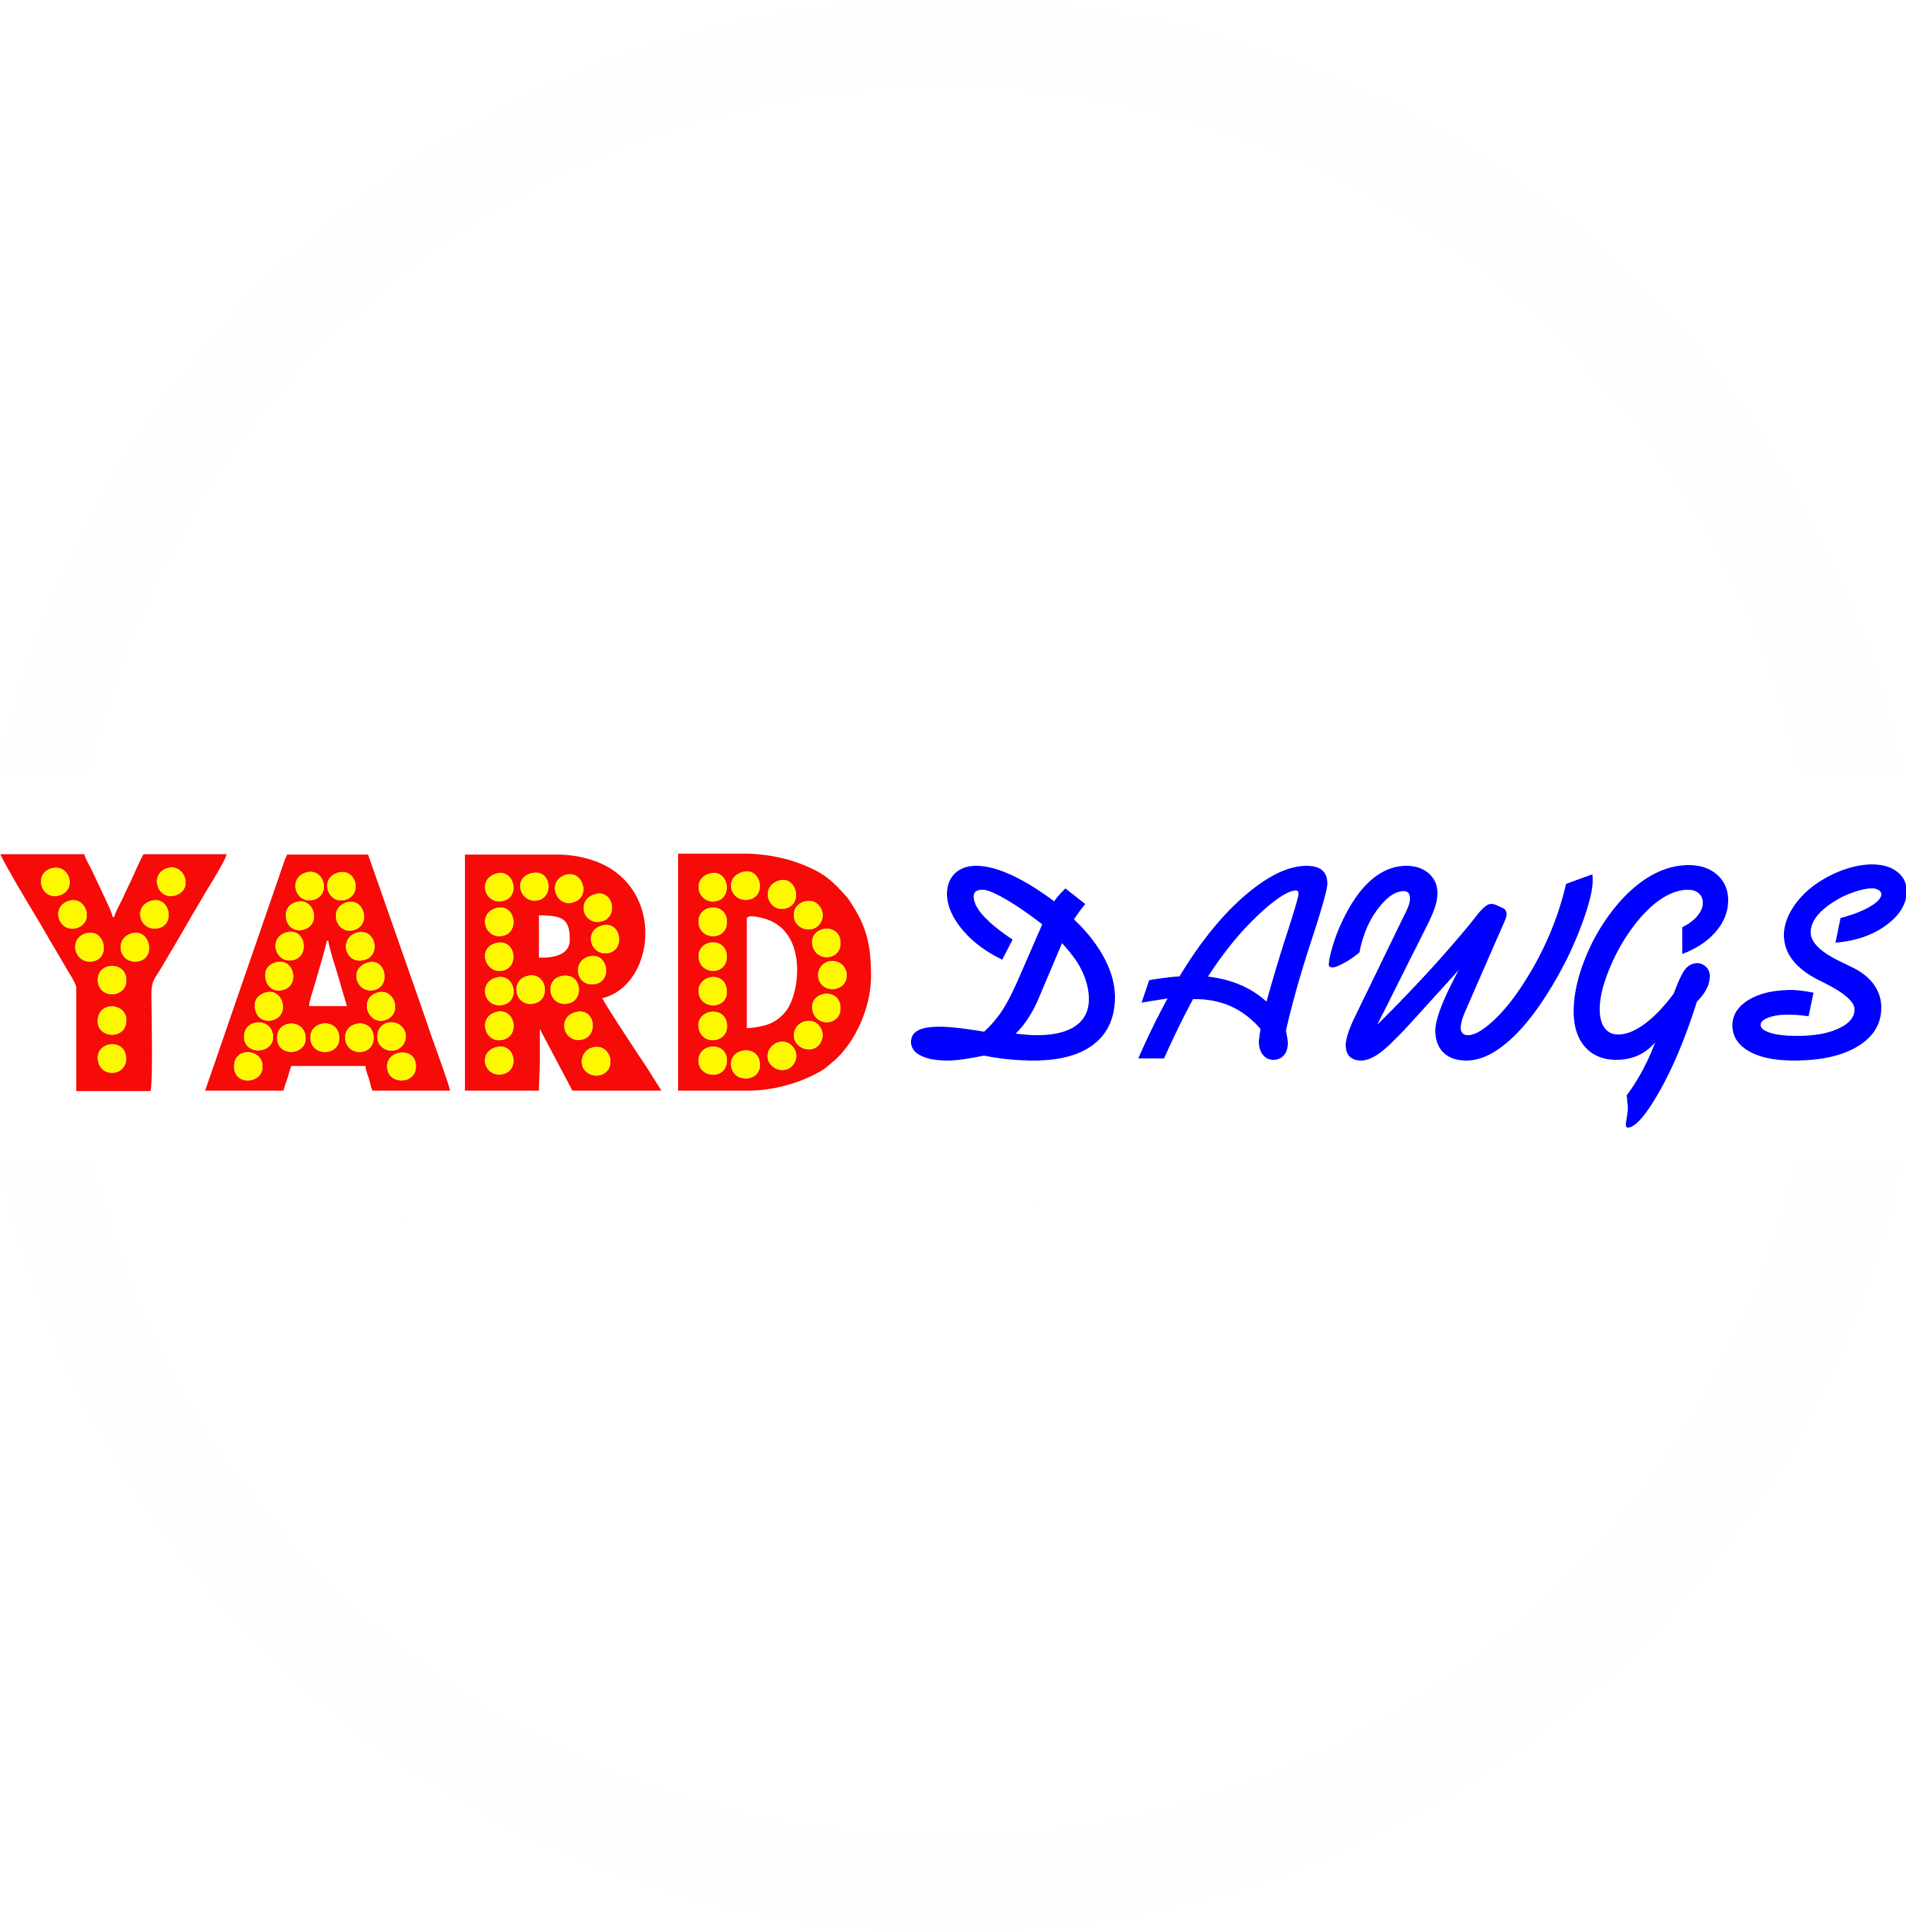 Yard Dawgs Beer Garden logo